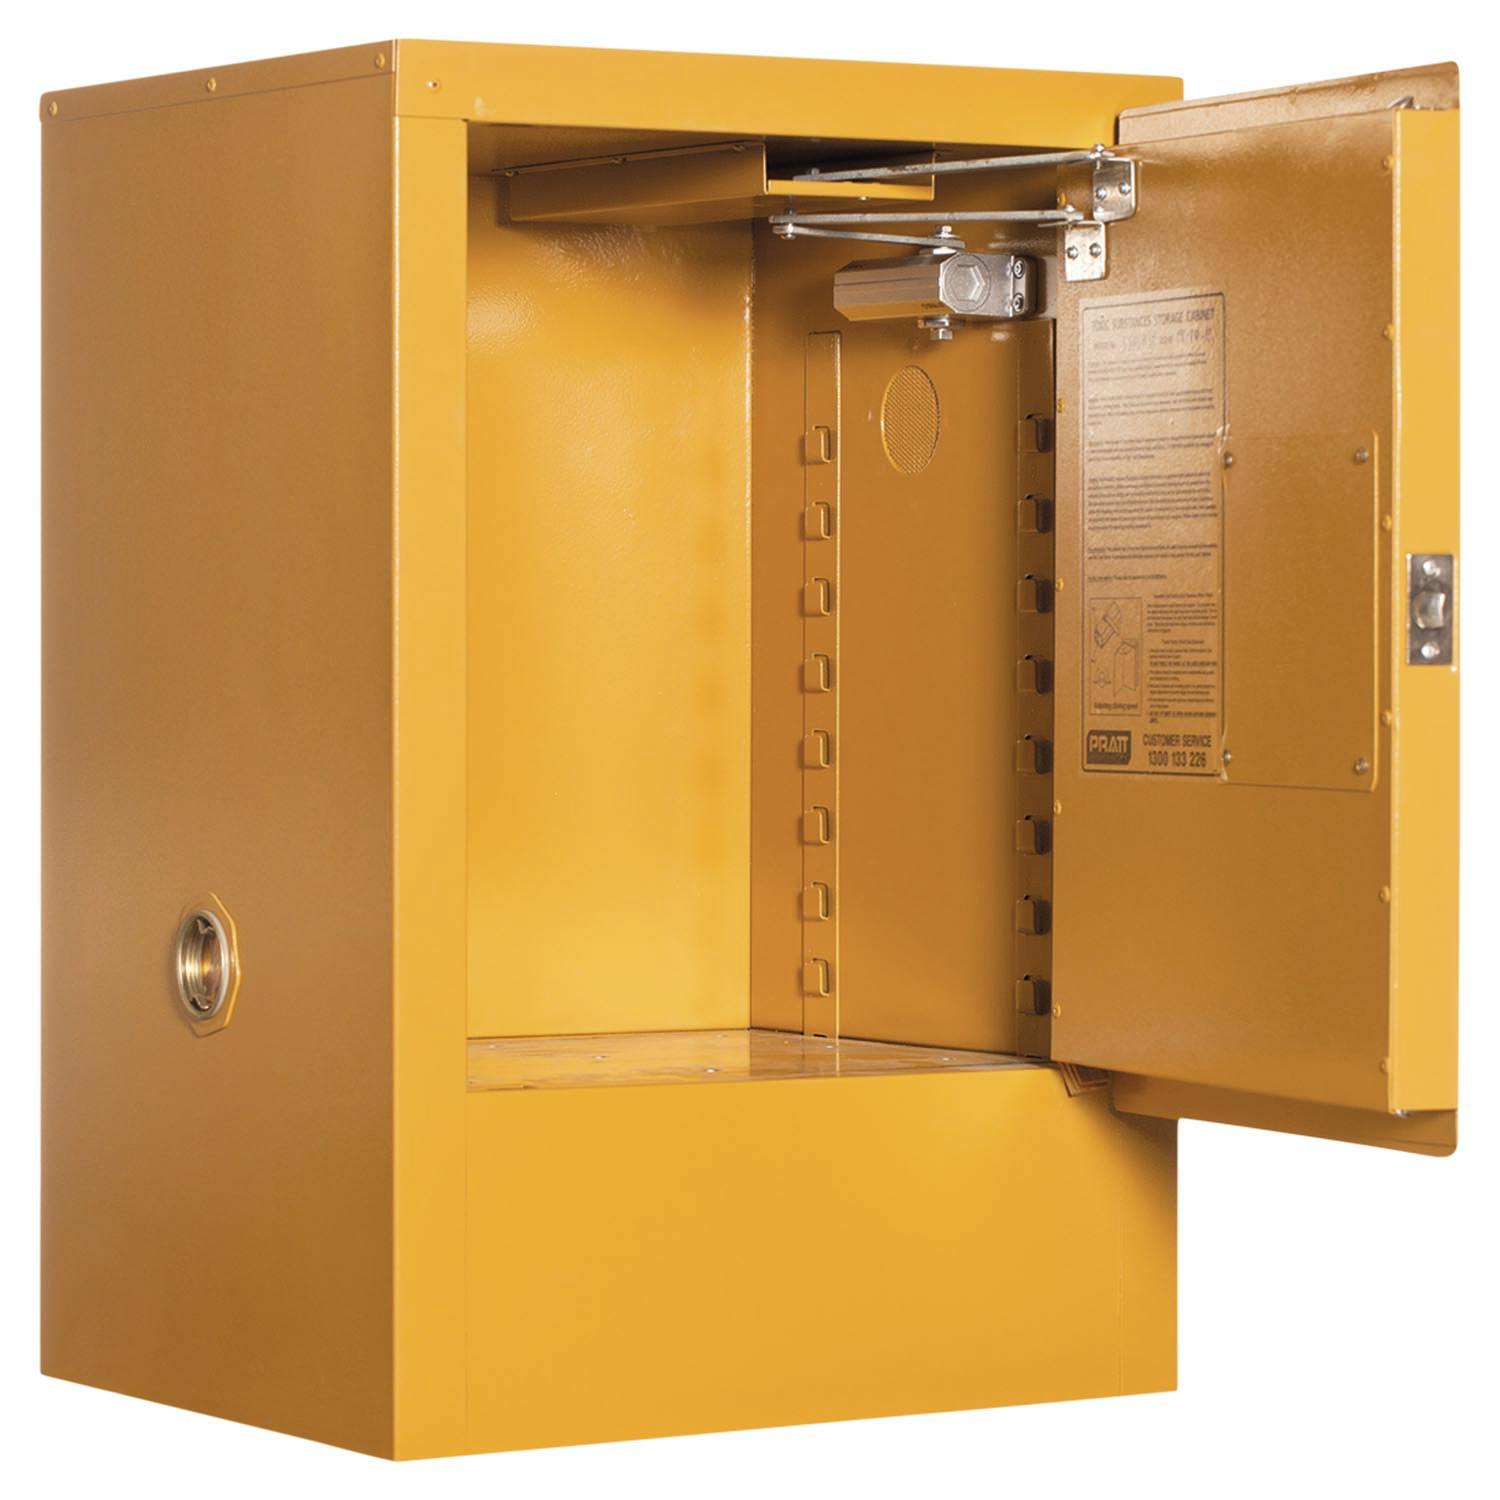 Pratt Toxic Substance Storage Cabinet: 30L - 1 Door - 1 Shelf